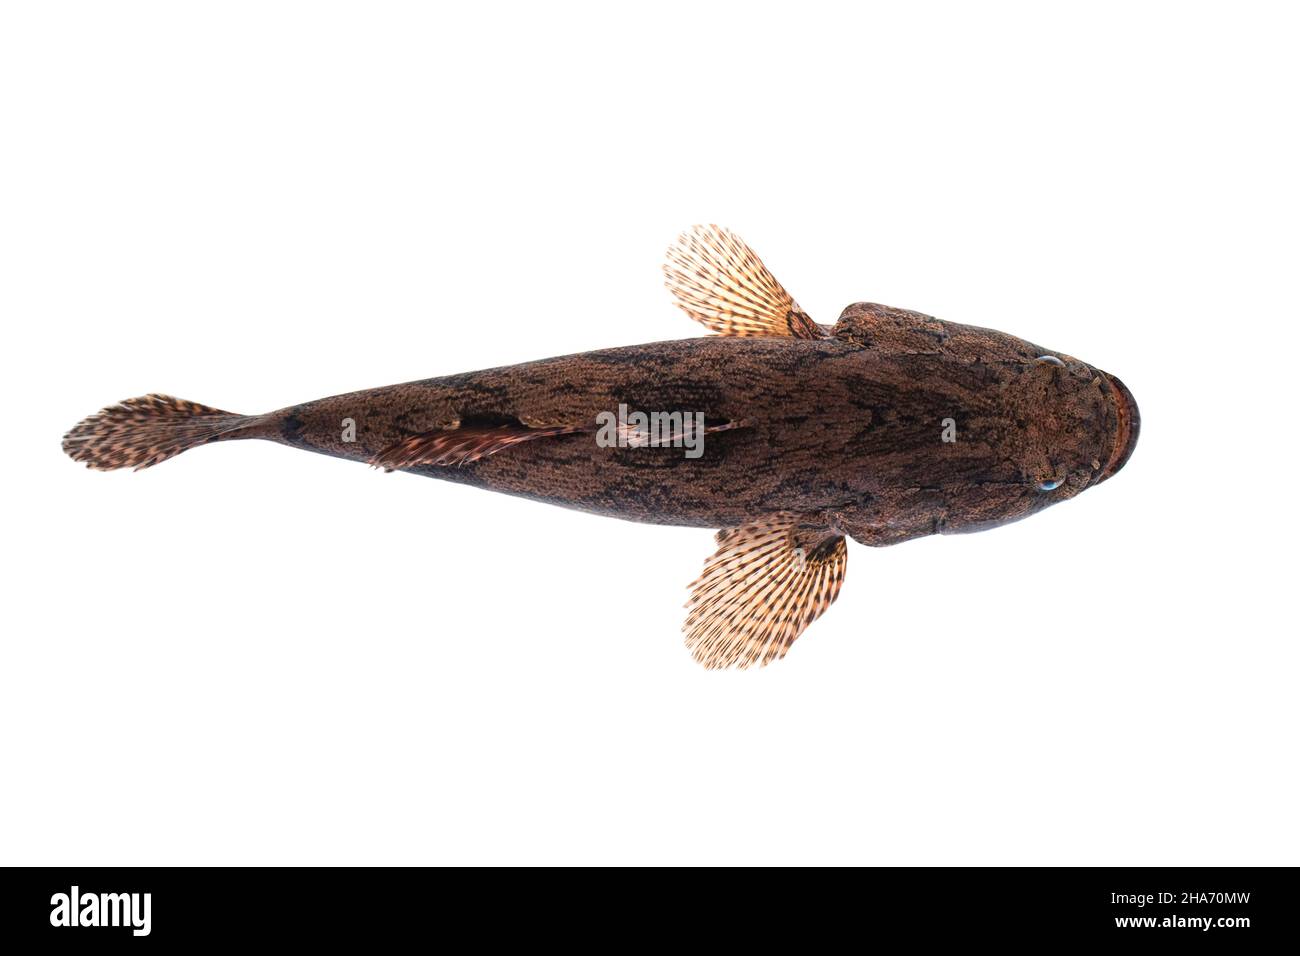 Image of fresh goby fish on a white background. Aquatic animals. Stock Photo